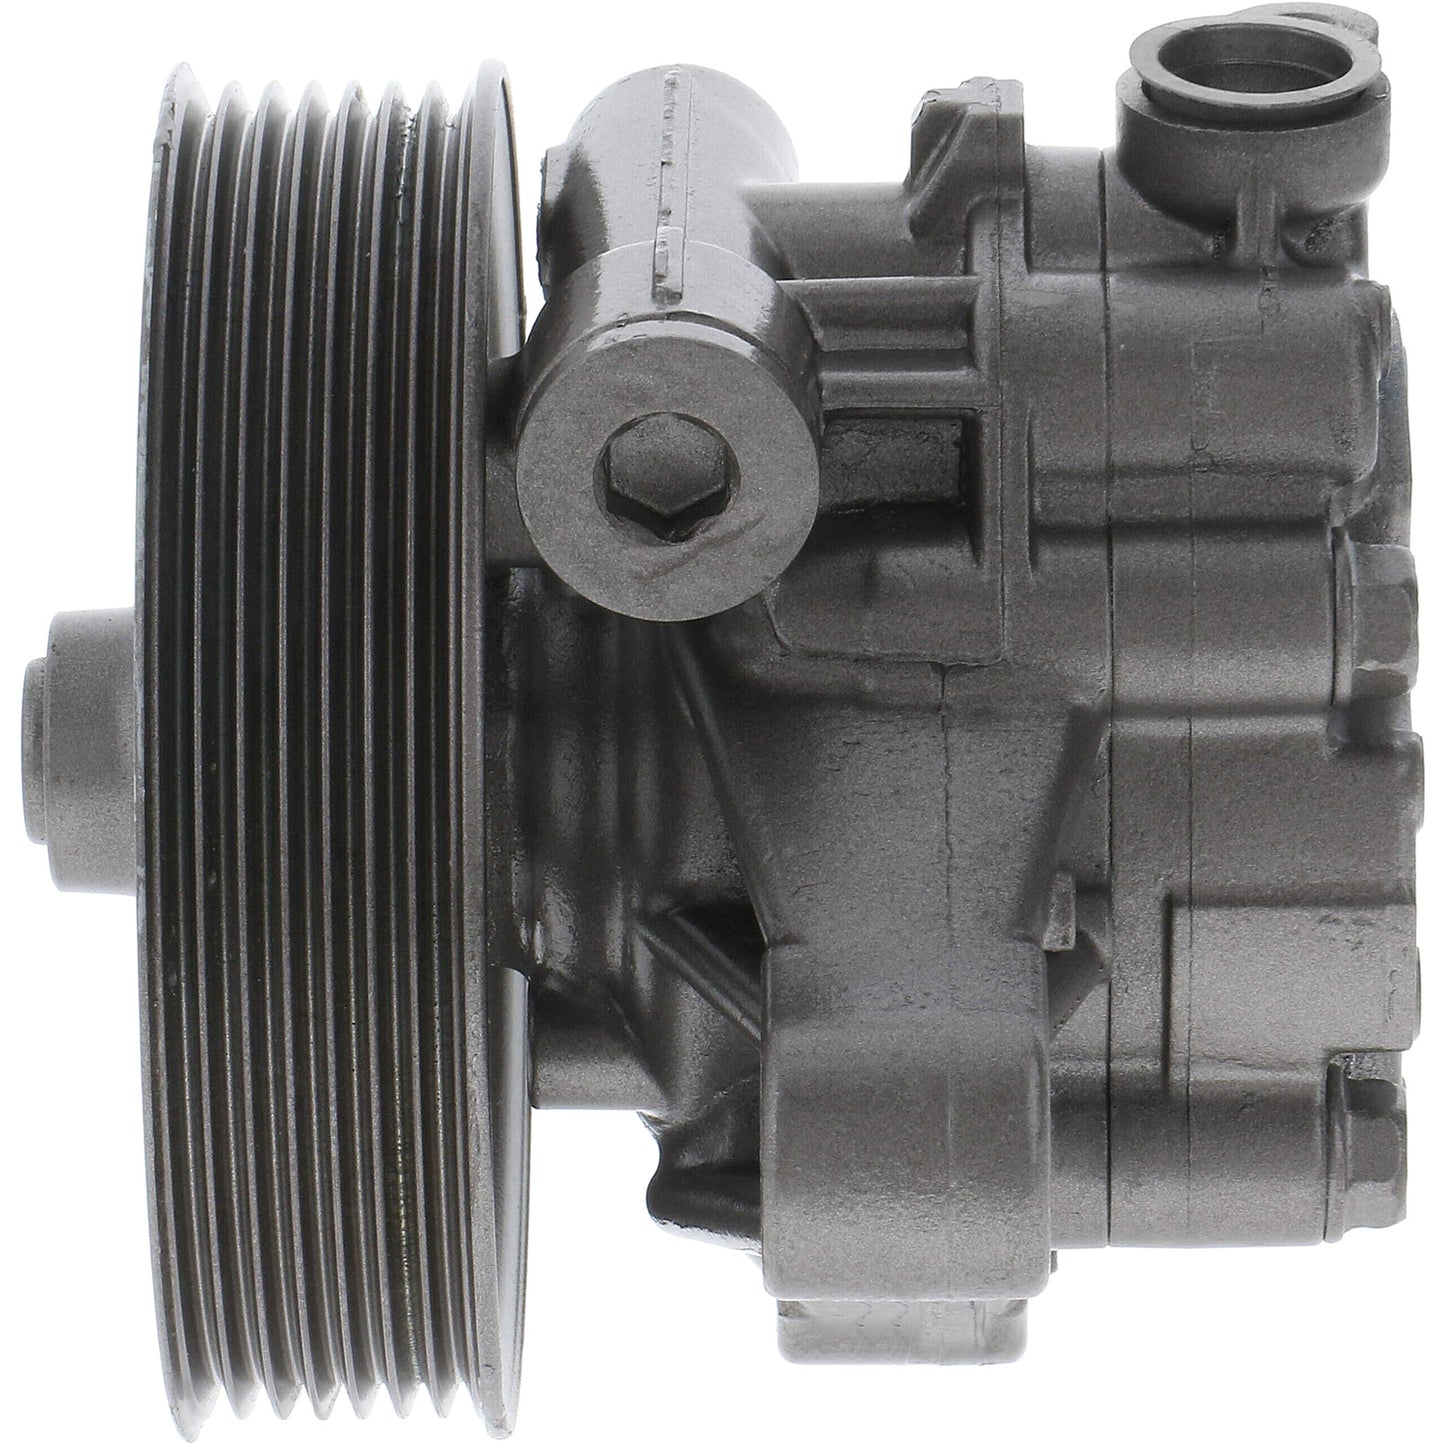 Power Steering Pump - MAVAL - Hydraulic Power - Remanufactured - 96575M